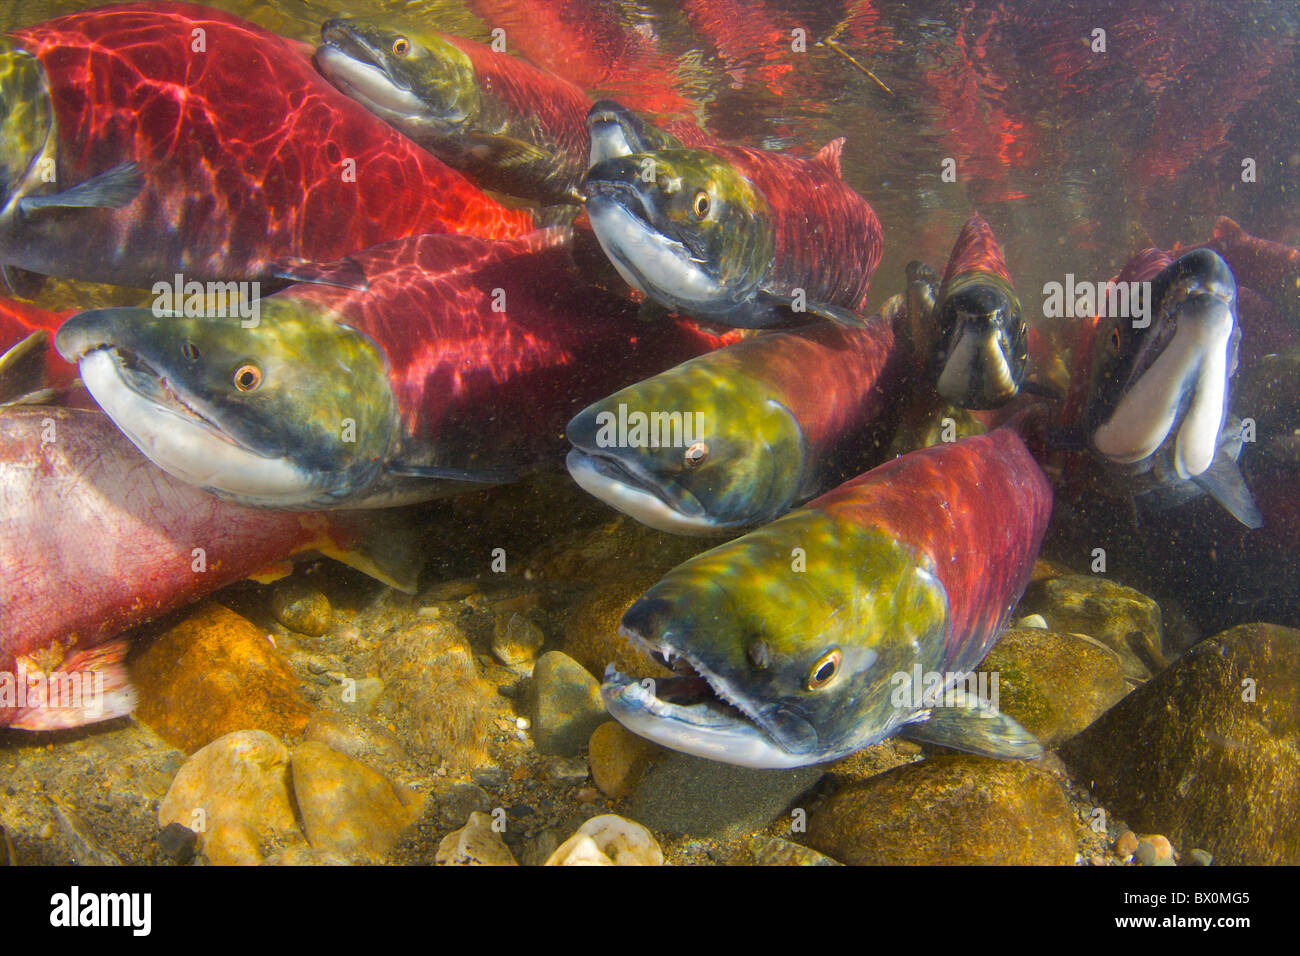 2010 Record setting Sockeye Salmon run fro the Pacific to Adams River British Columbia spawning. Stock Photo